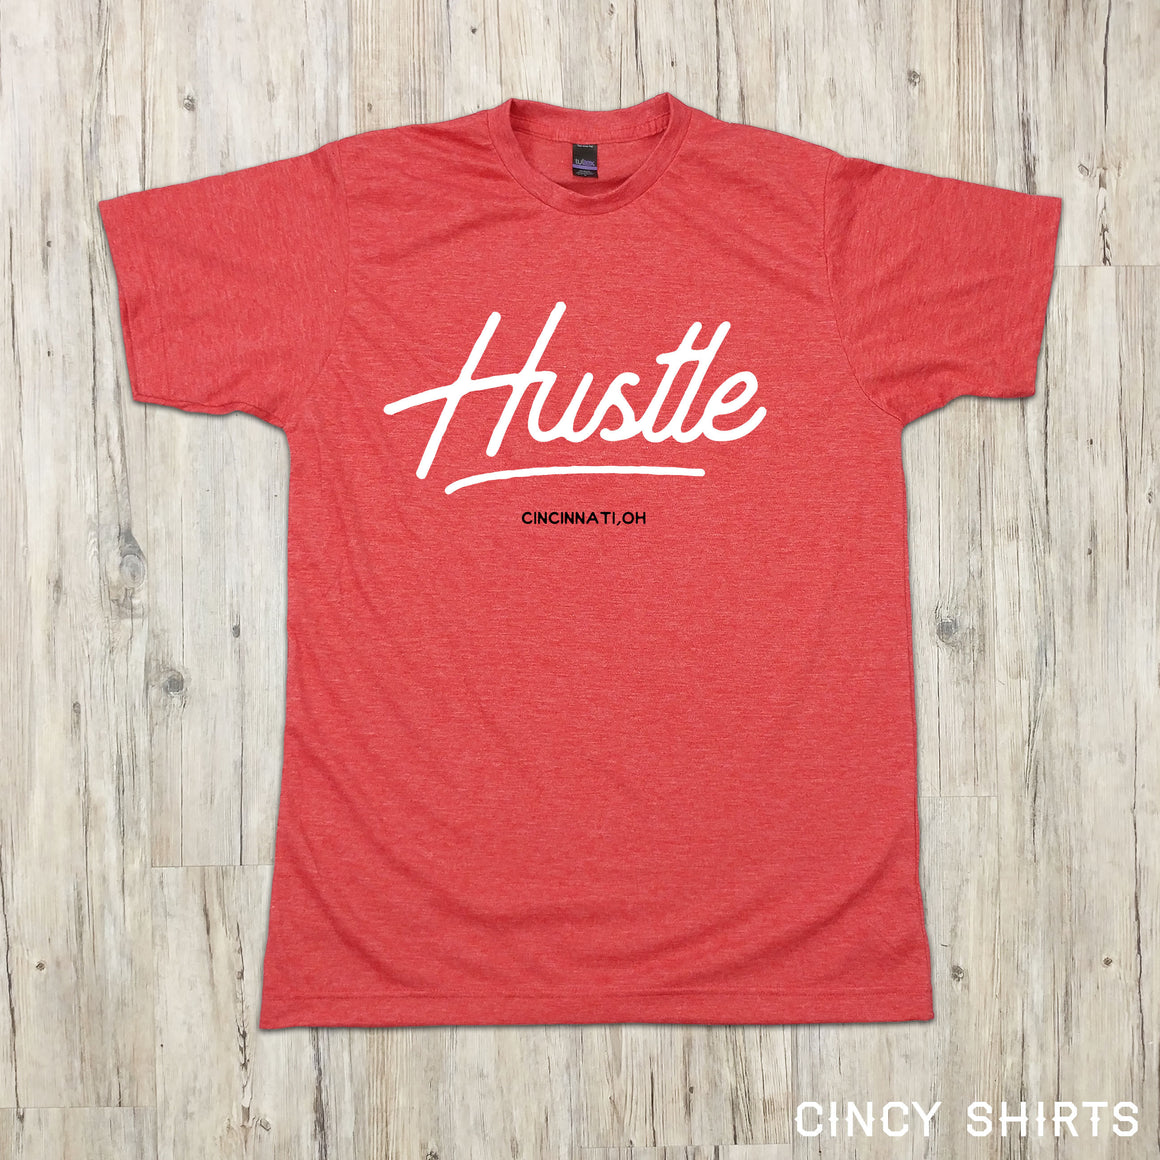 Hustle Cincinnati - Cincy Shirts